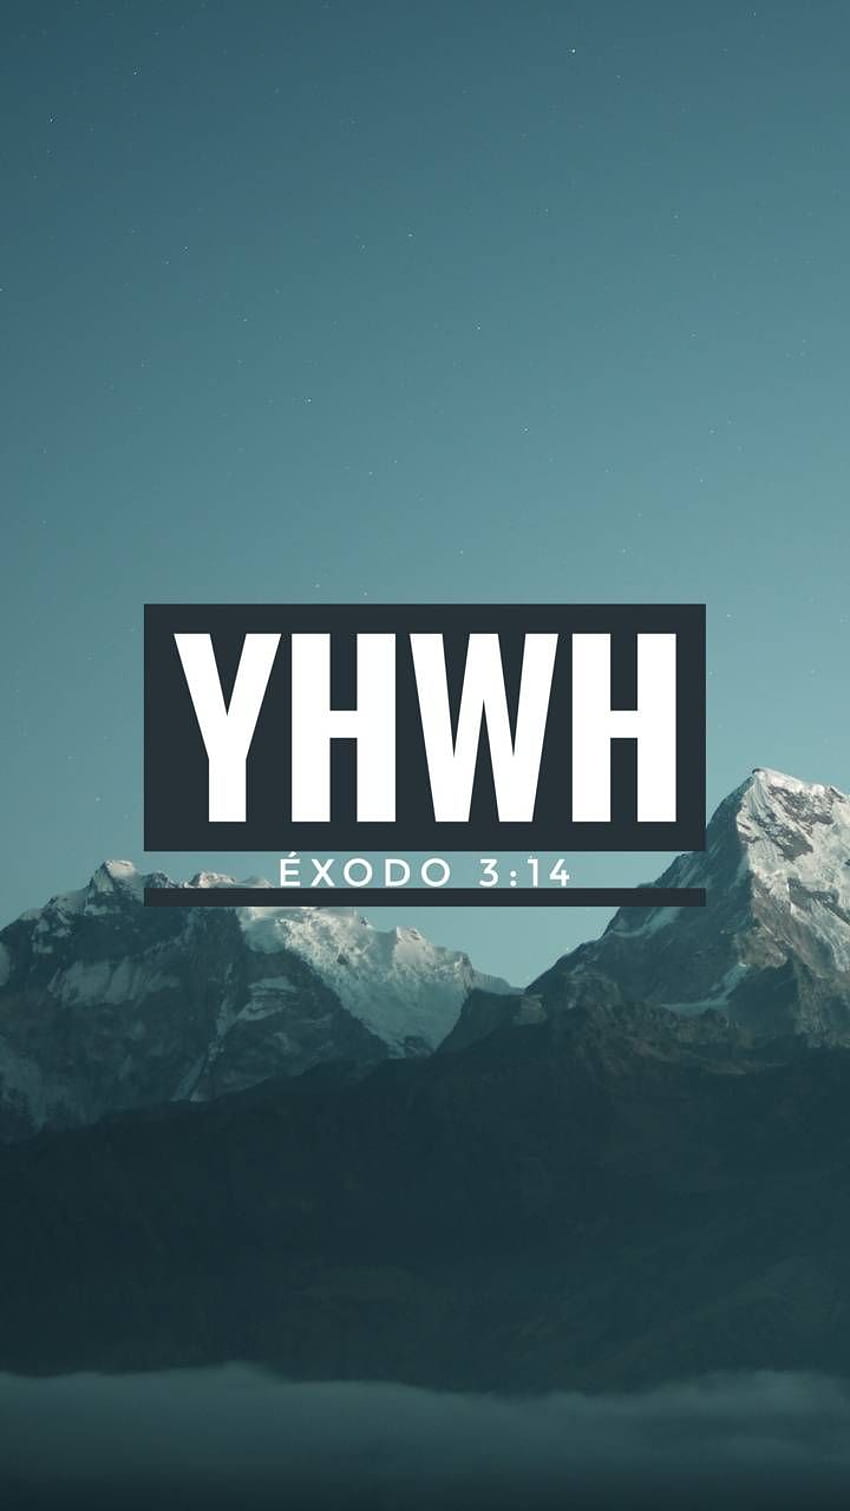 YHWH by JeffC29 - a2 in 2021. 예수, 성경 구절 카드, 기독교인, 증거 HD 전화 배경 화면